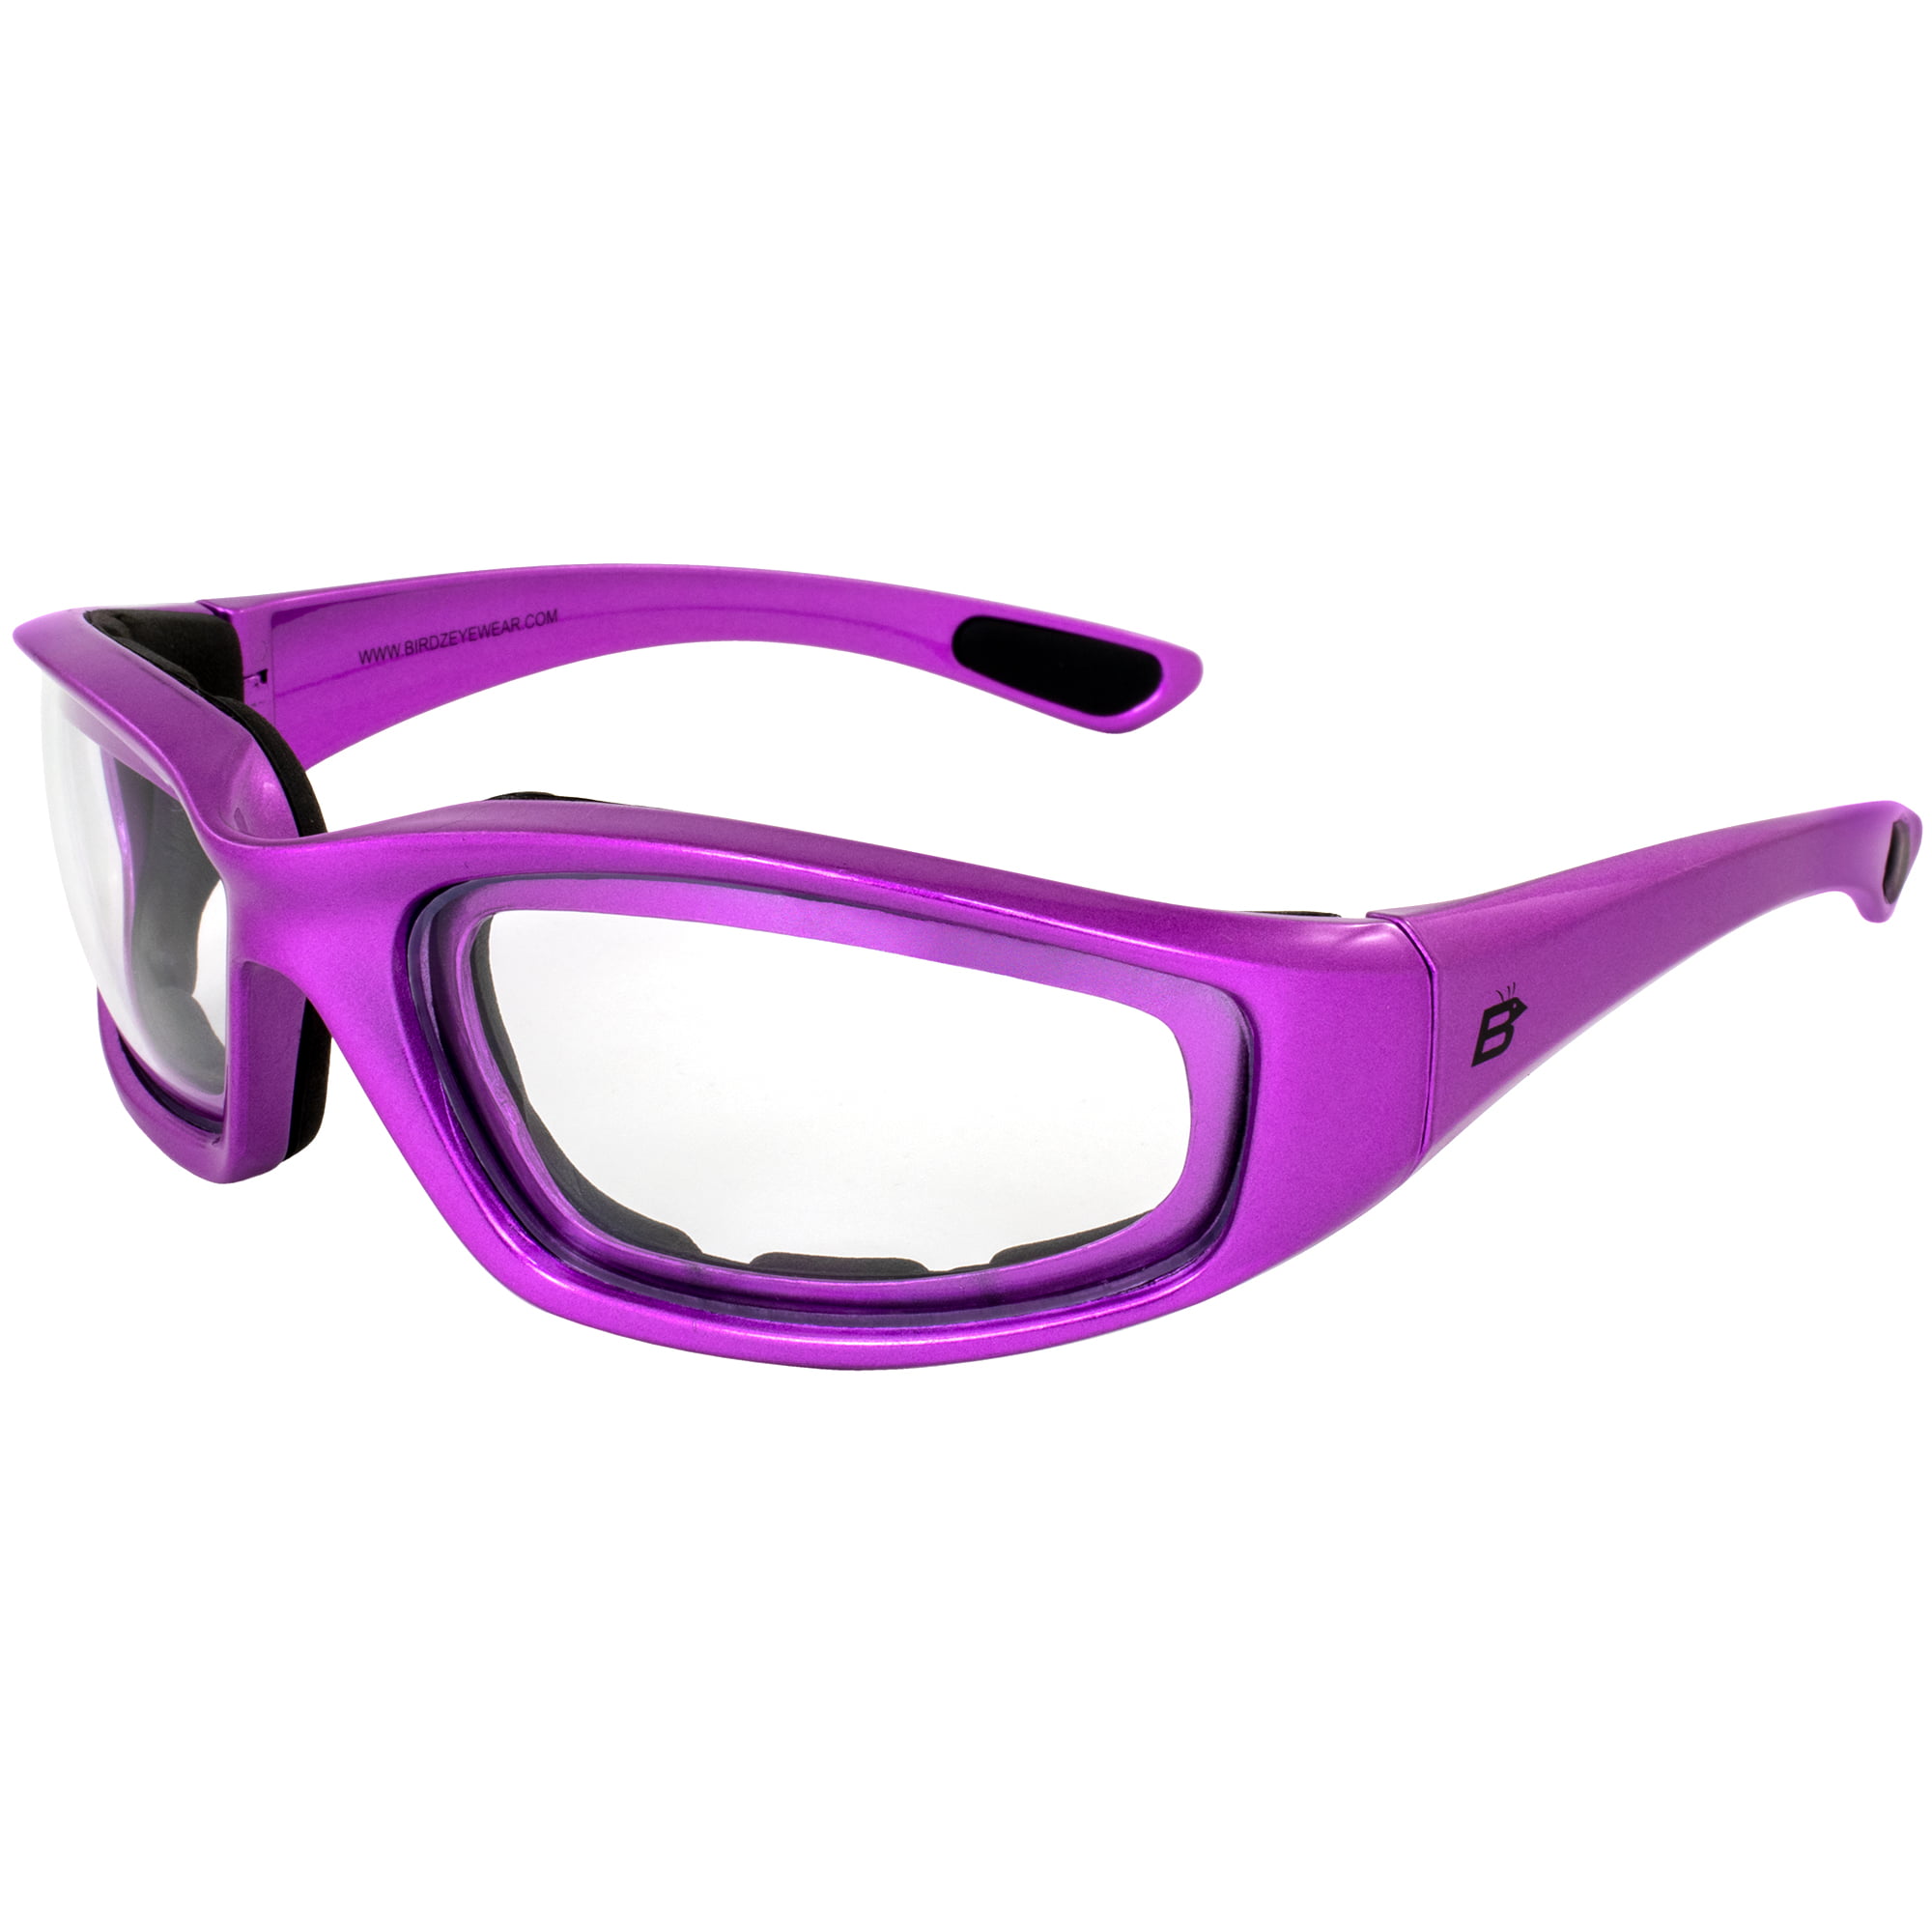 Birdz Oriole Anti Fog Padded Motorcycle Sunglasses For Women Purple Frame  w/ Shatterproof & Scratch-Resistant Clear Lenses